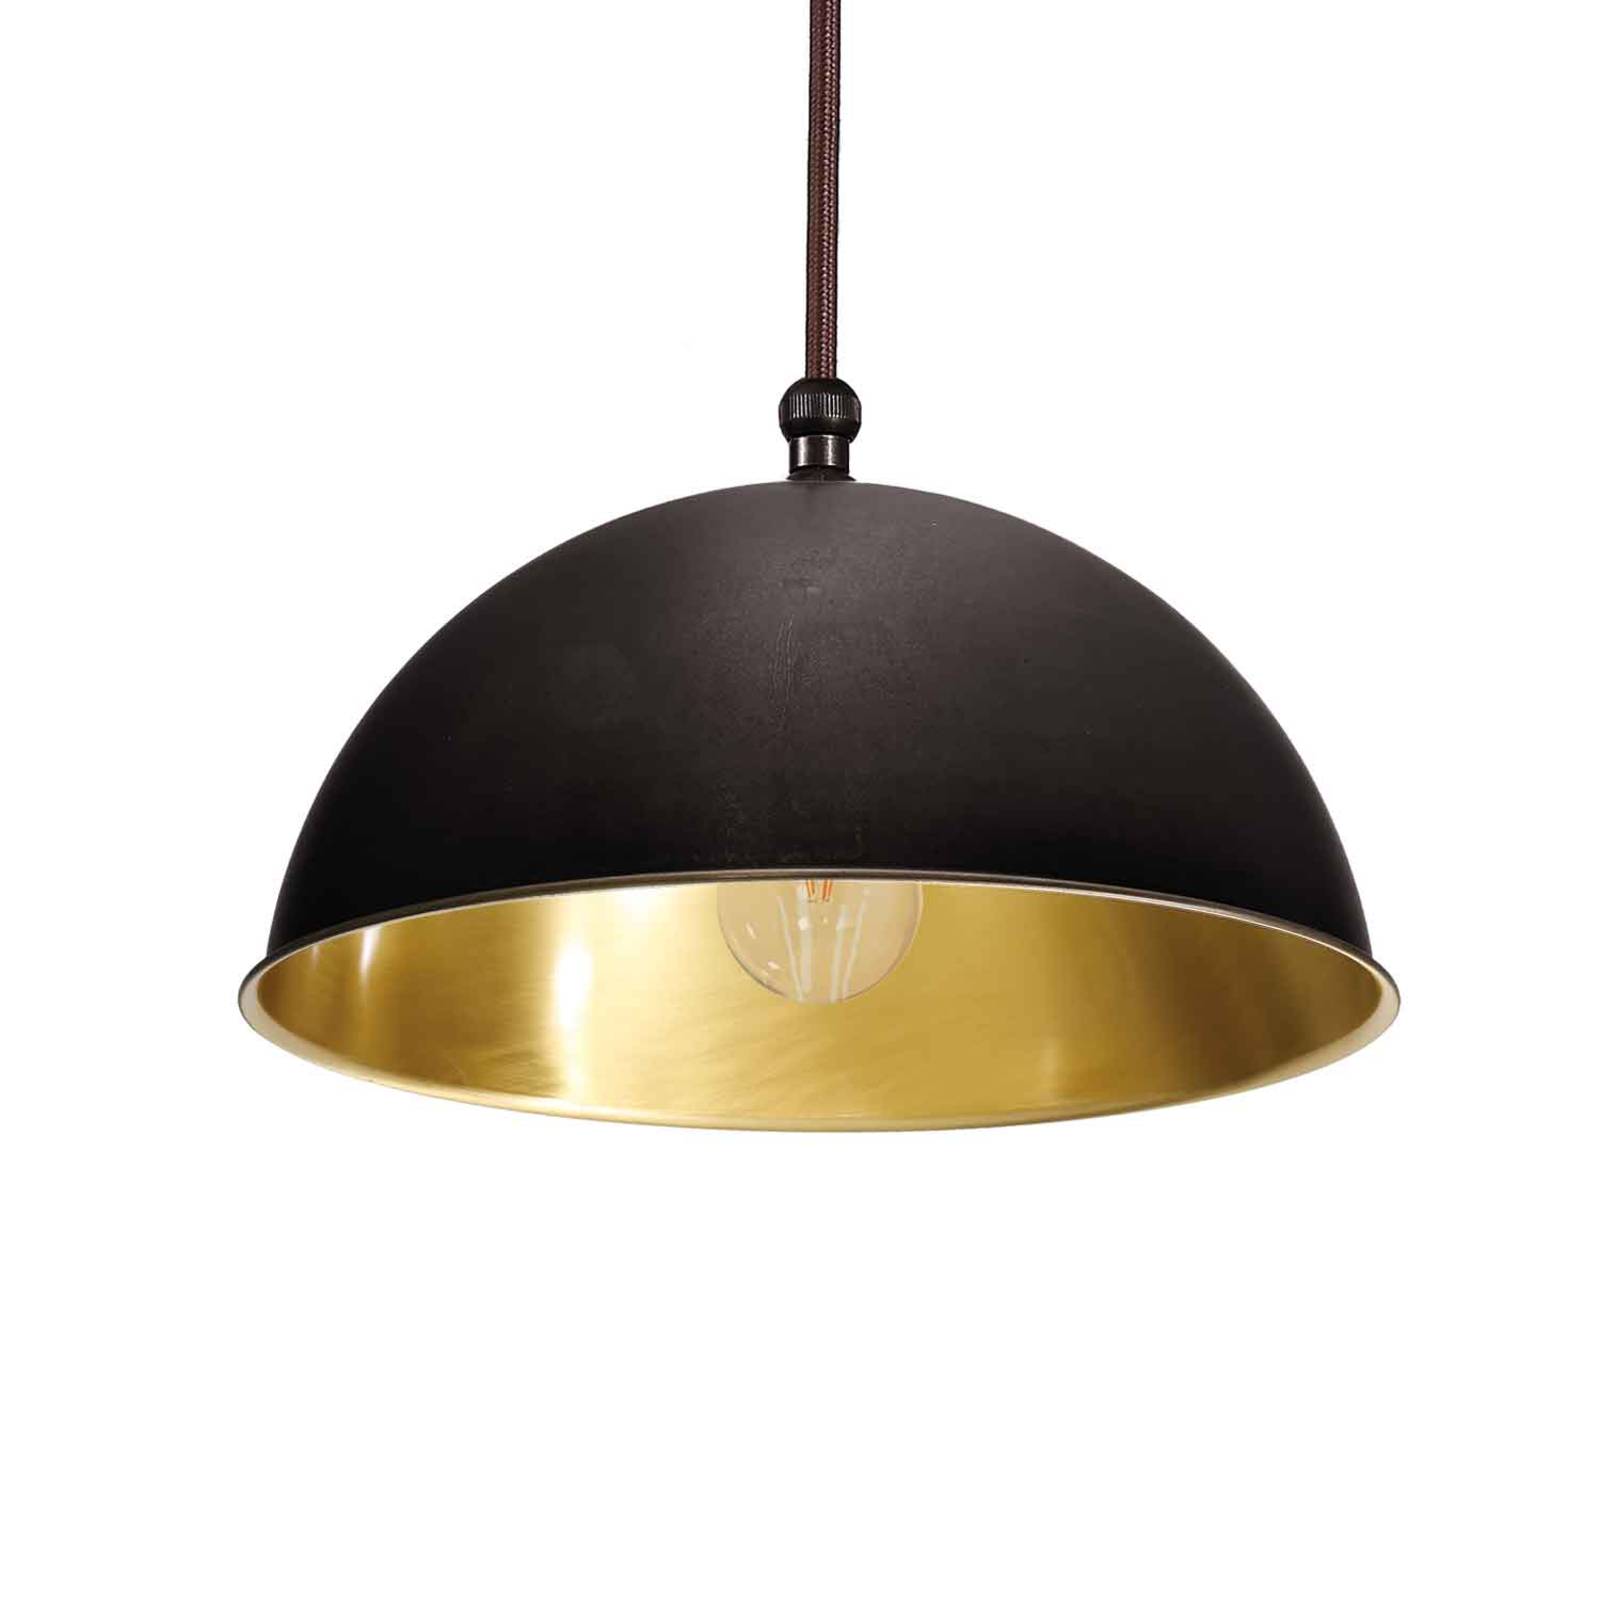 Lampa wisząca Circle, złota/mosiężna, Ø15cm